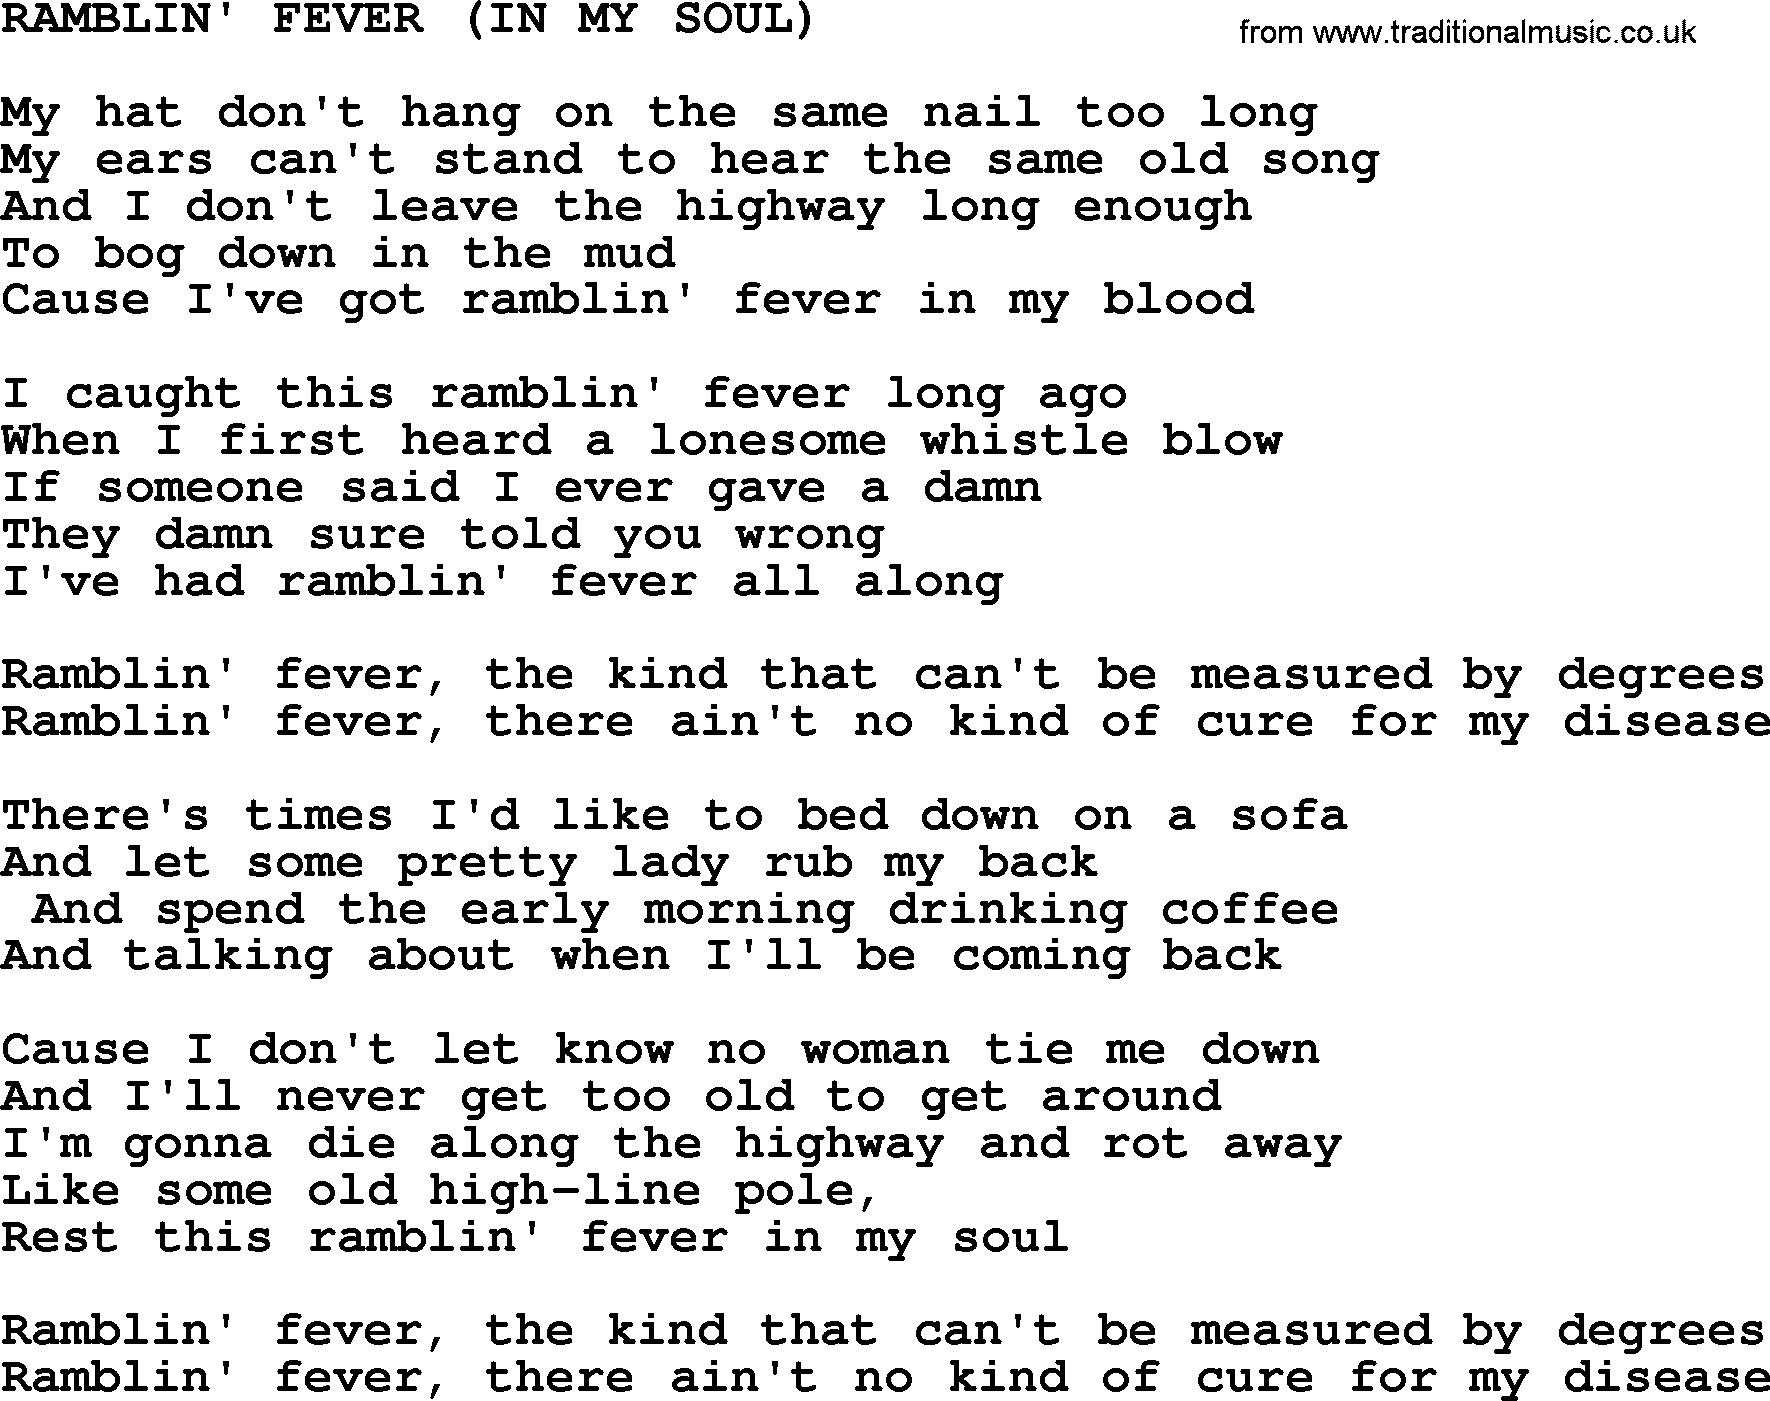 Merle Haggard song: Ramblin' Fever In My Soul, lyrics.